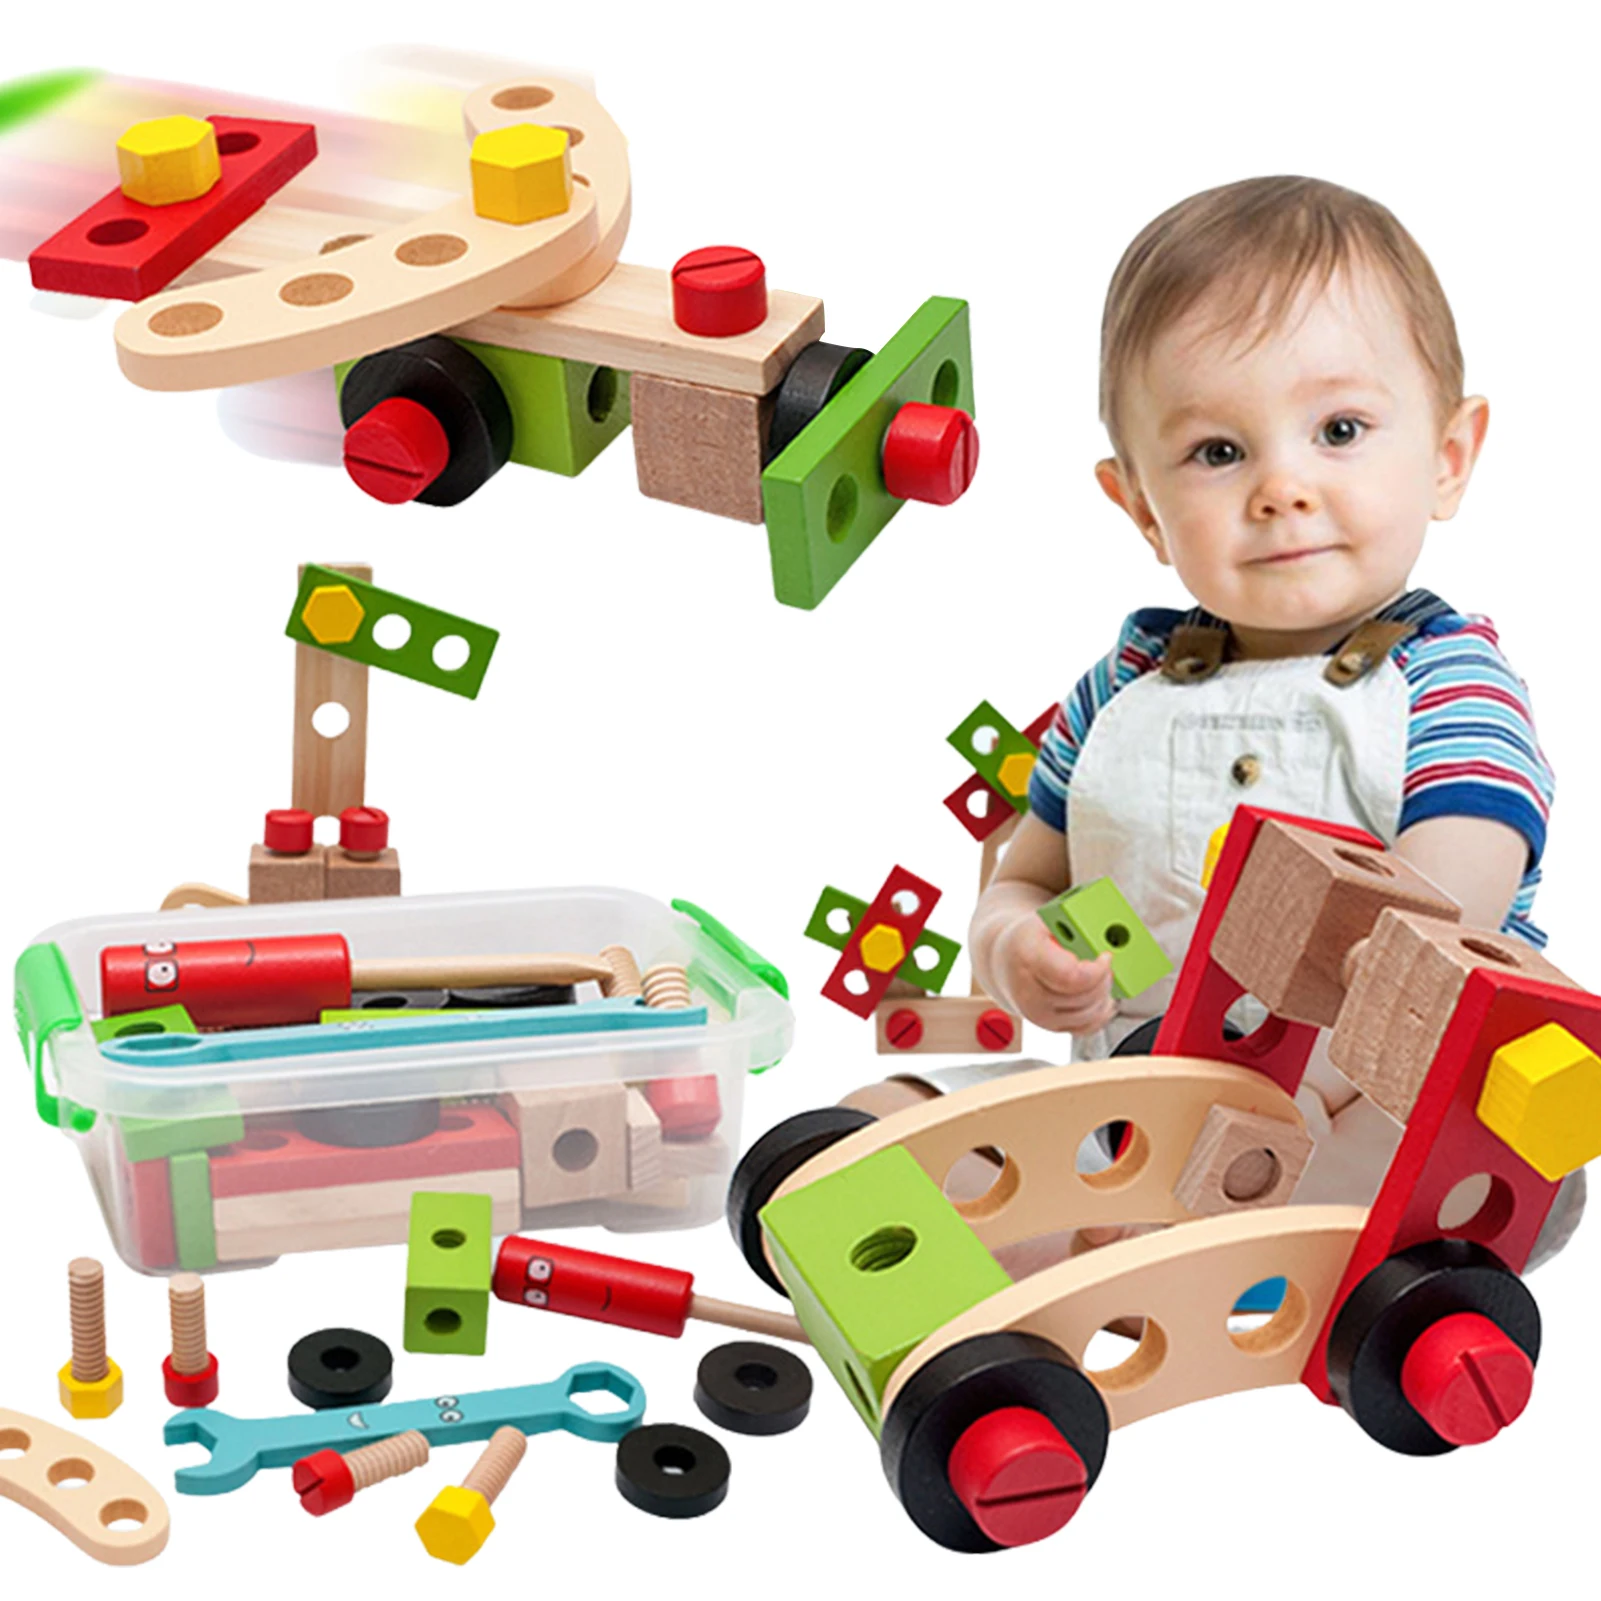 

Educational Montessori Kids Toys Wooden Toolbox Pretend Play Set Preschool Children Nut Screw Assembly Simulation Carpenter Tool